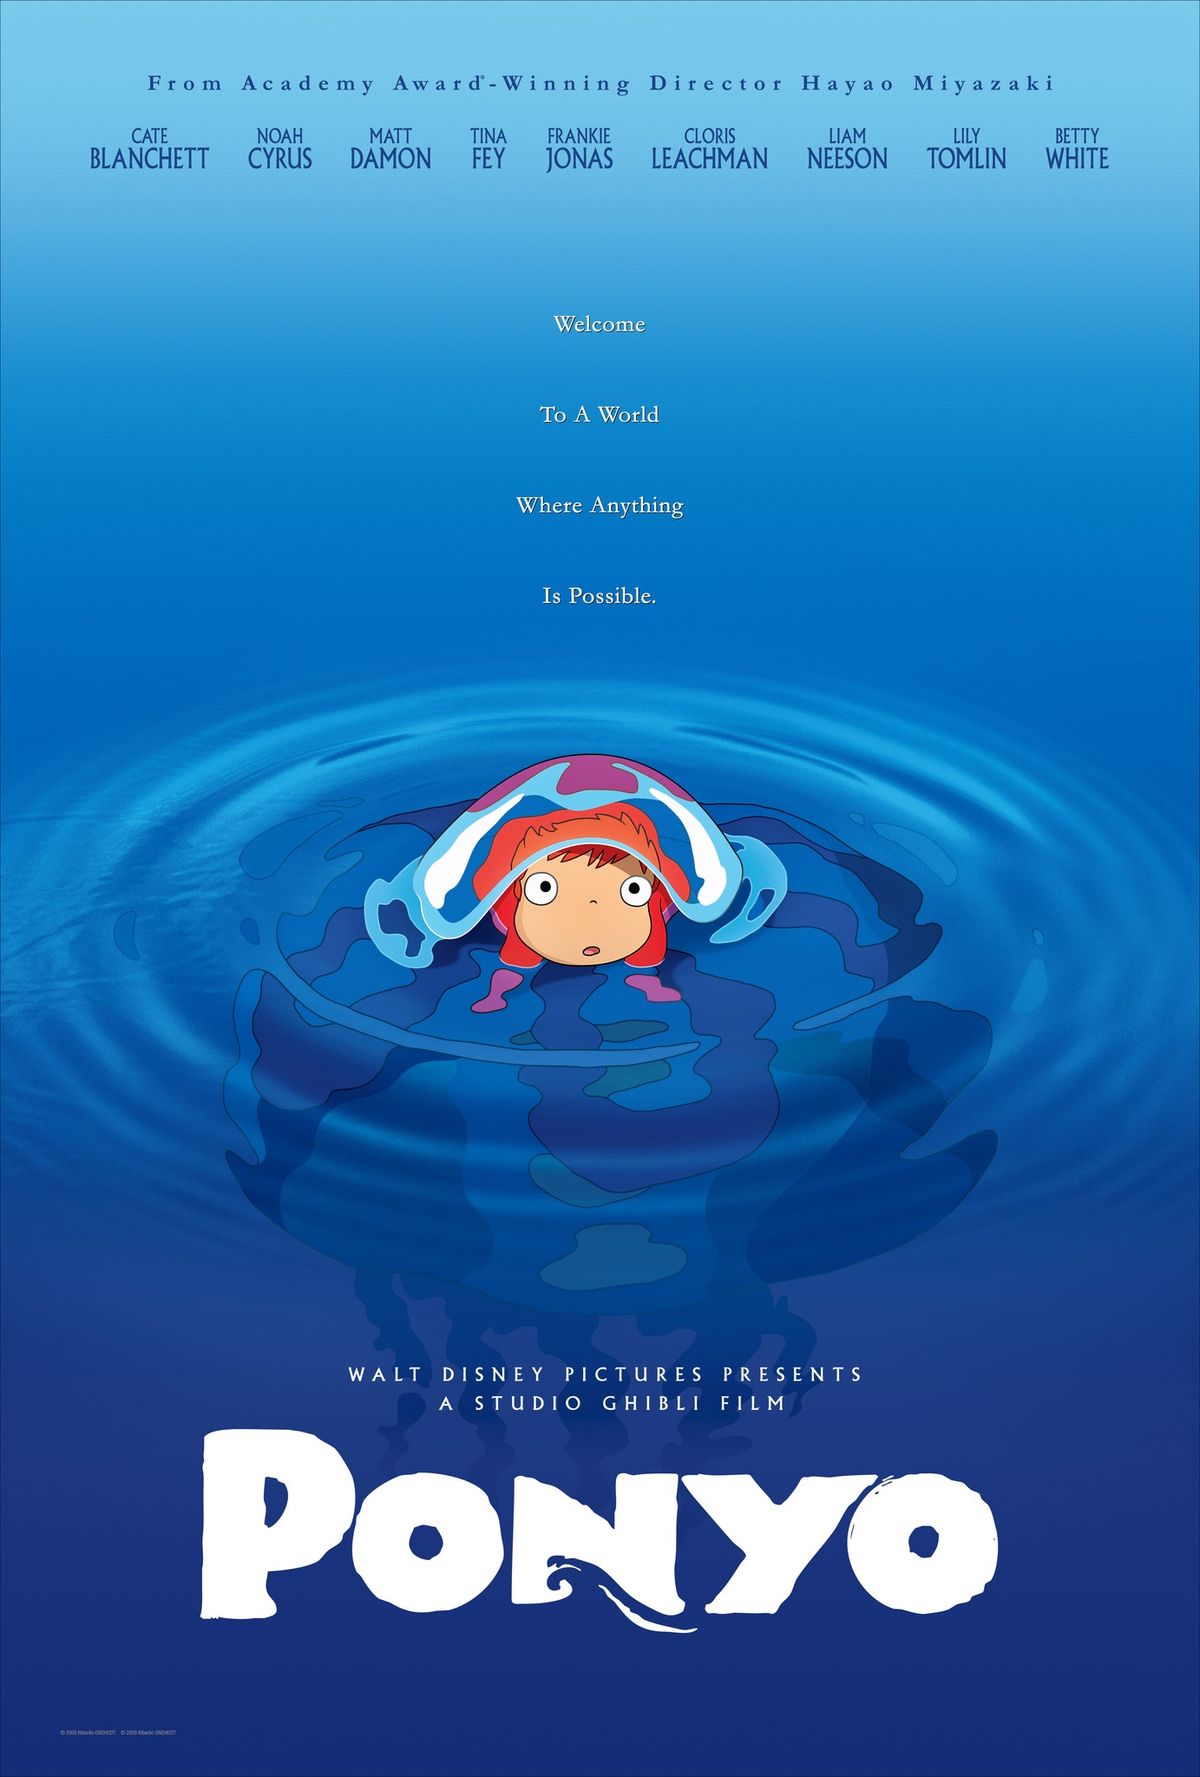 Hayao Miyazaki Retrospektive - Ponyo - Das gro\u00dfe Abenteuer am Meer (OmU)